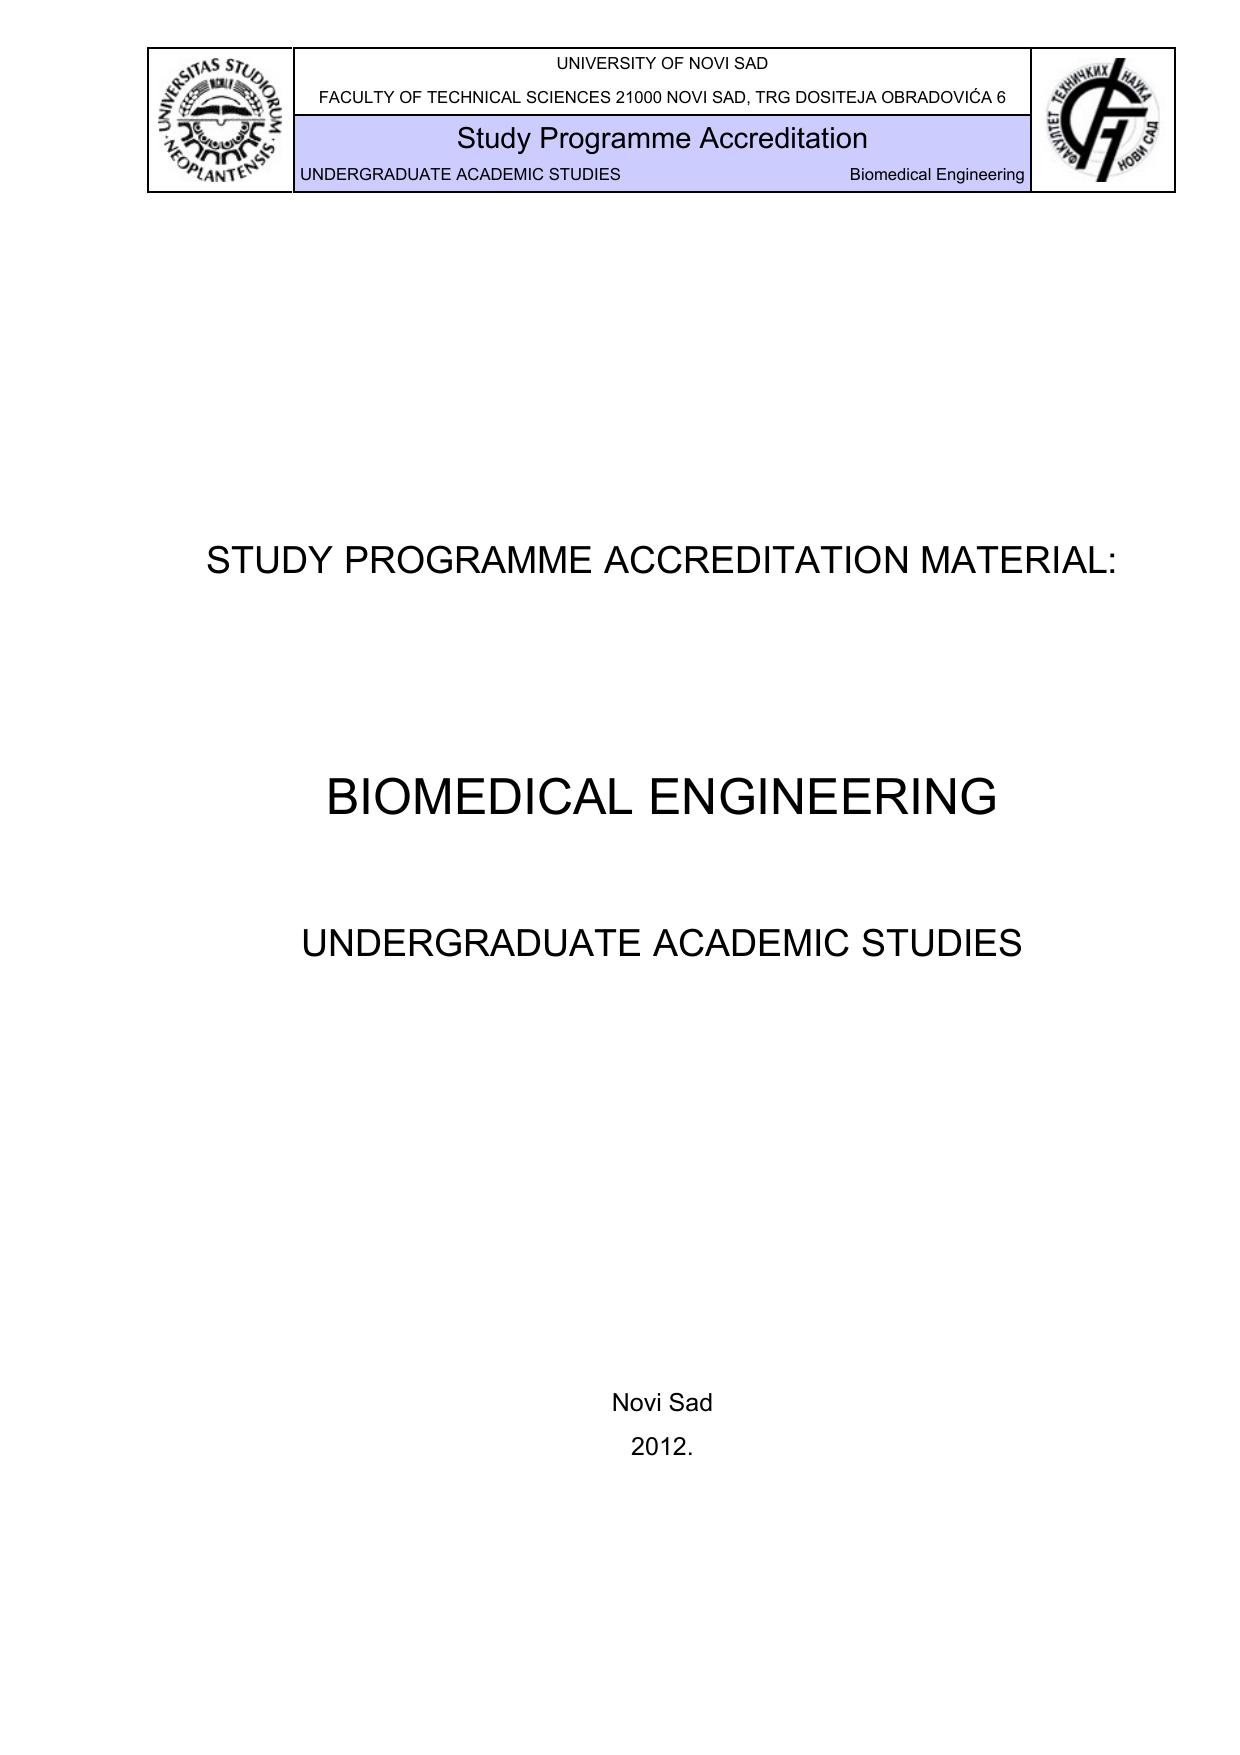 Biomedical Engineering 2012.pdf